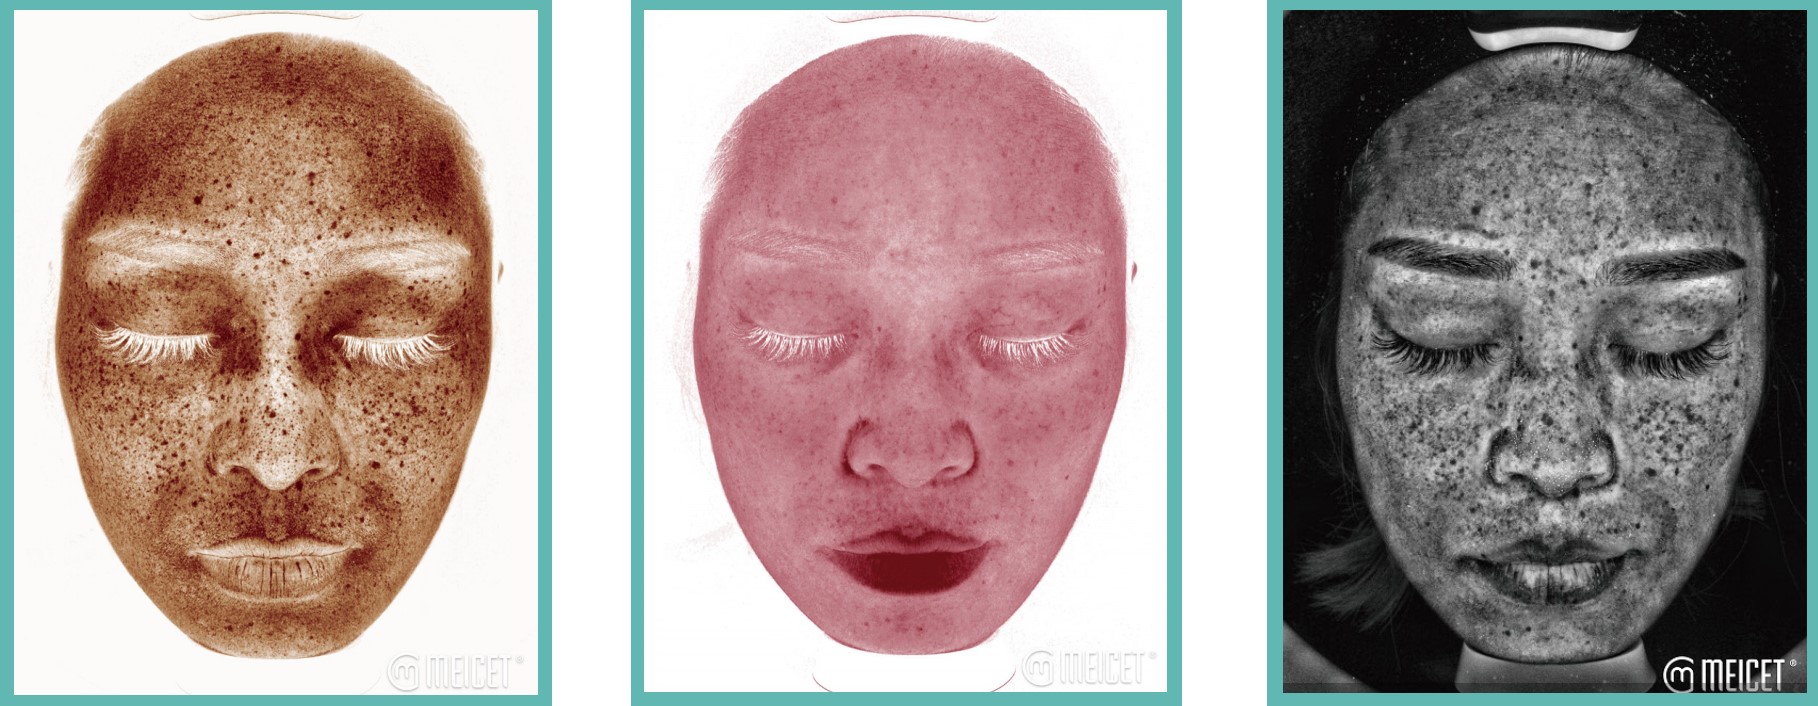 Resur professional skin analyzer 3 analysis images